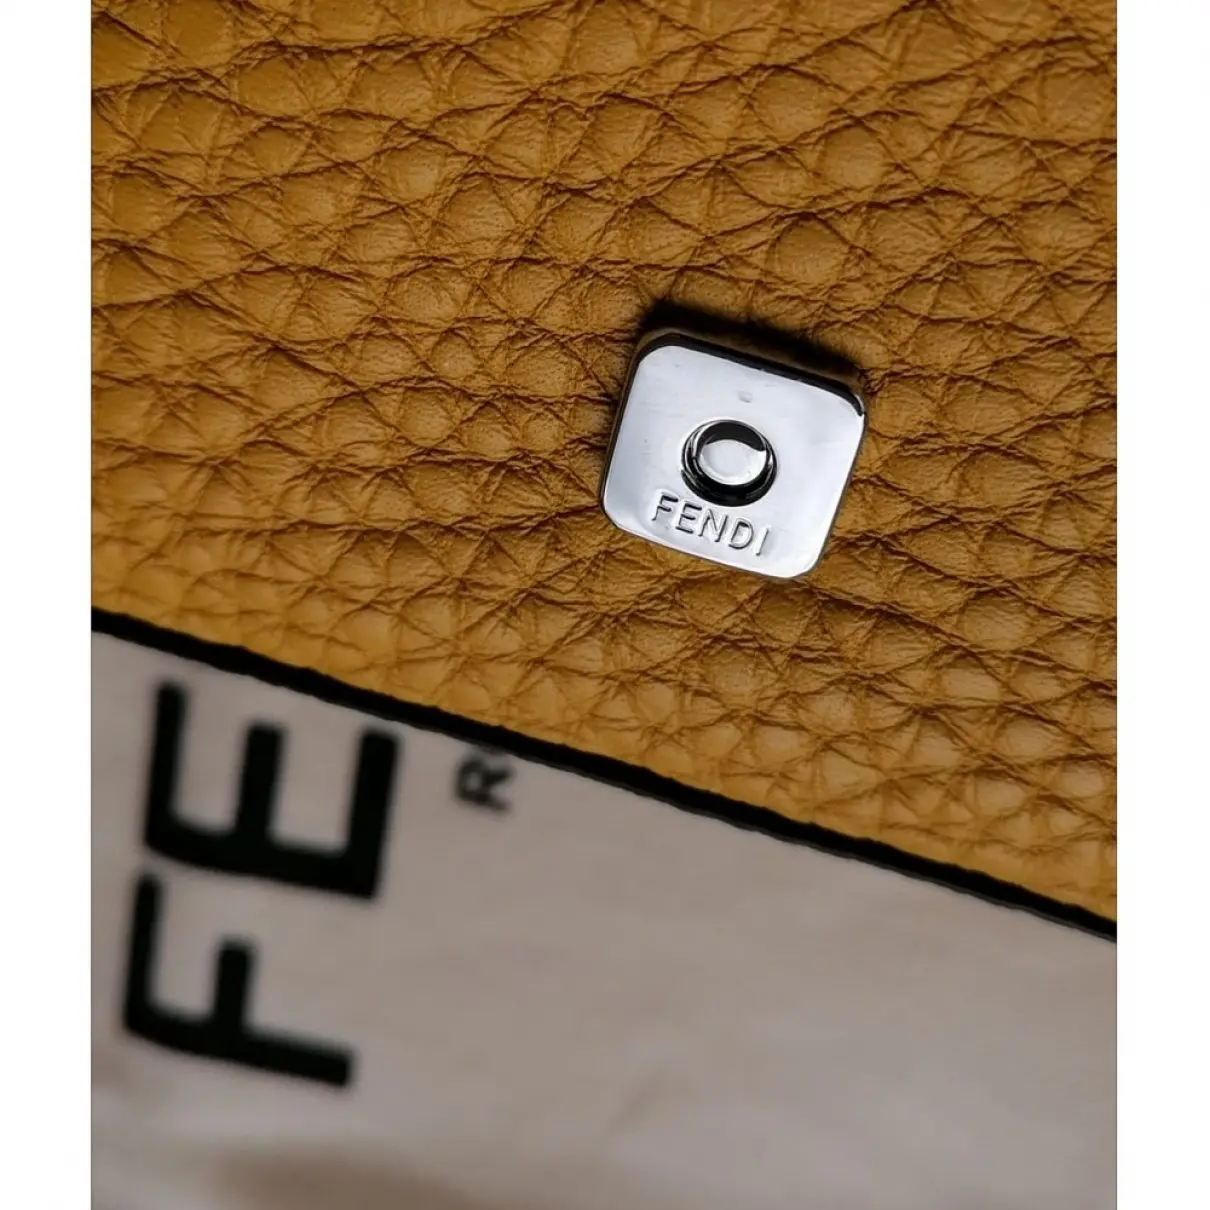 Baguette leather clutch bag Fendi